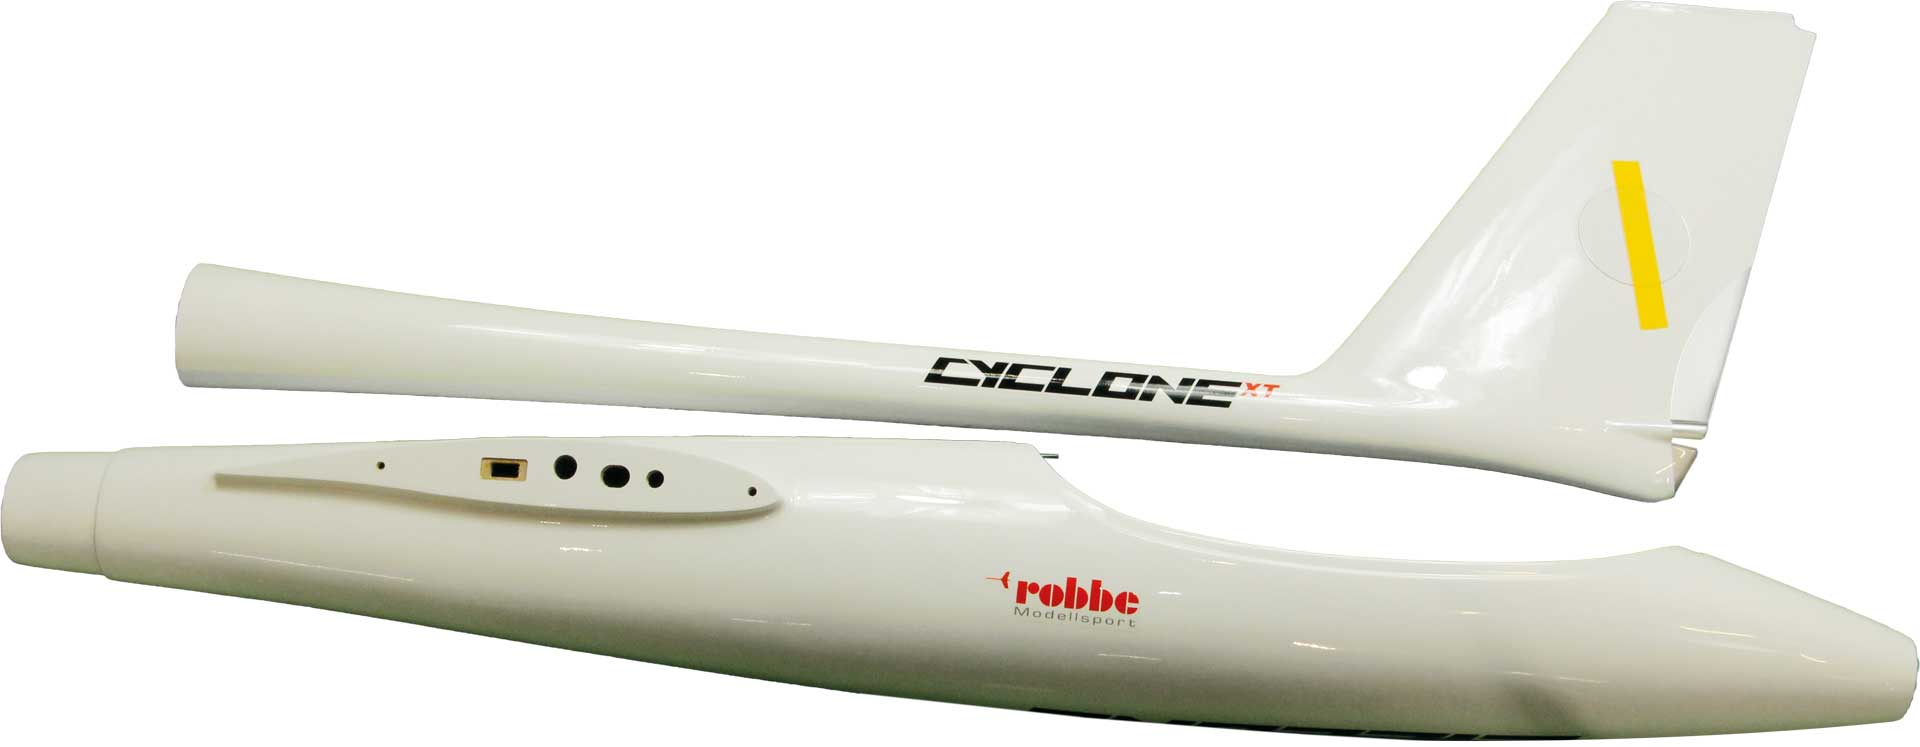 Robbe Modellsport Rumpf Cyclone XT ARF 6,2m ohne Elektroni k